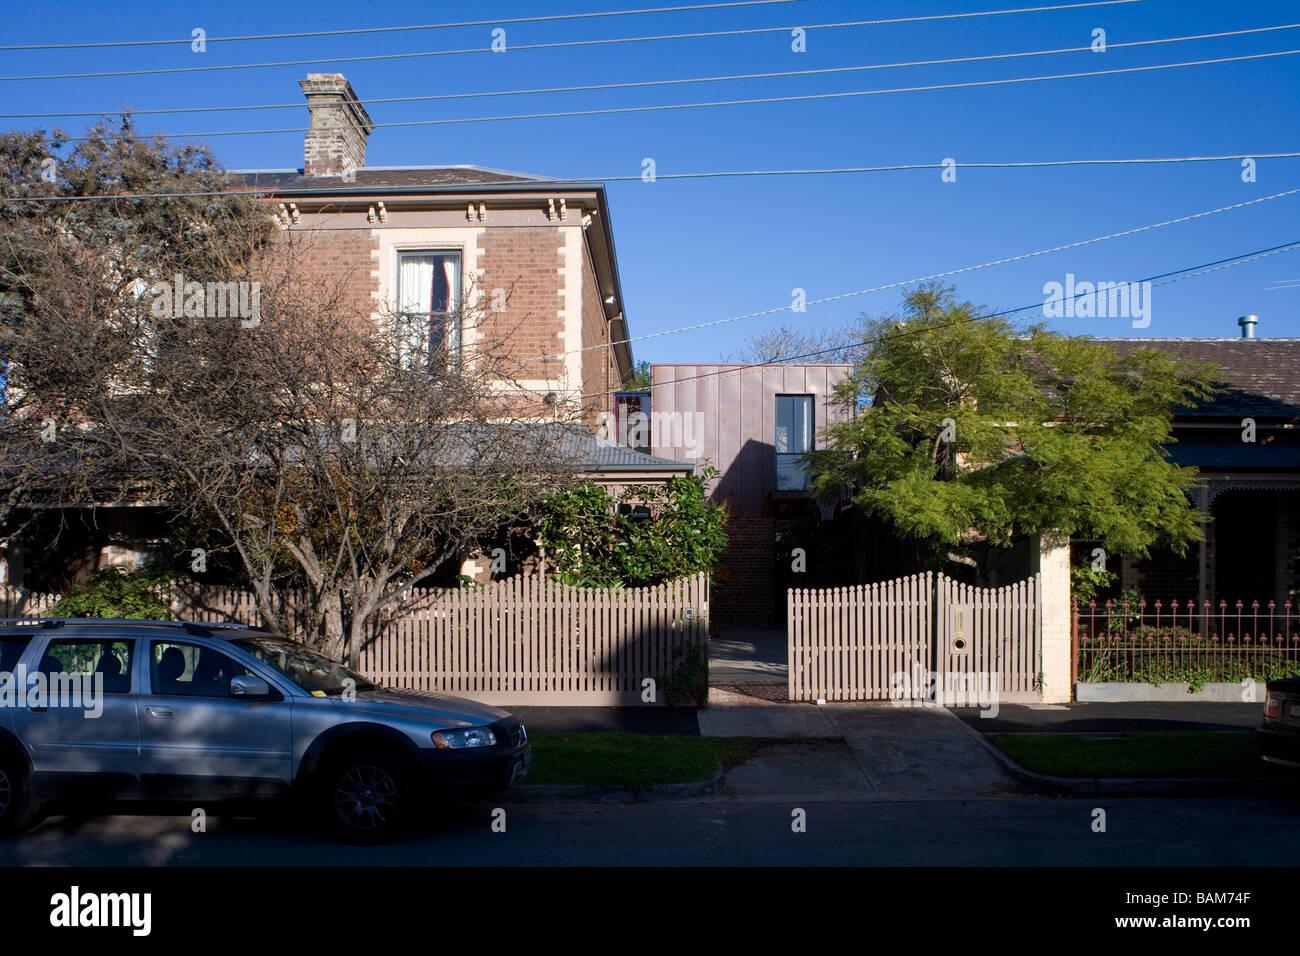 South Melbourne House, South Melbourne, Melbourne, Australien, Tom Isaksson Architect Haus Haus von gegenüber. Stockfoto